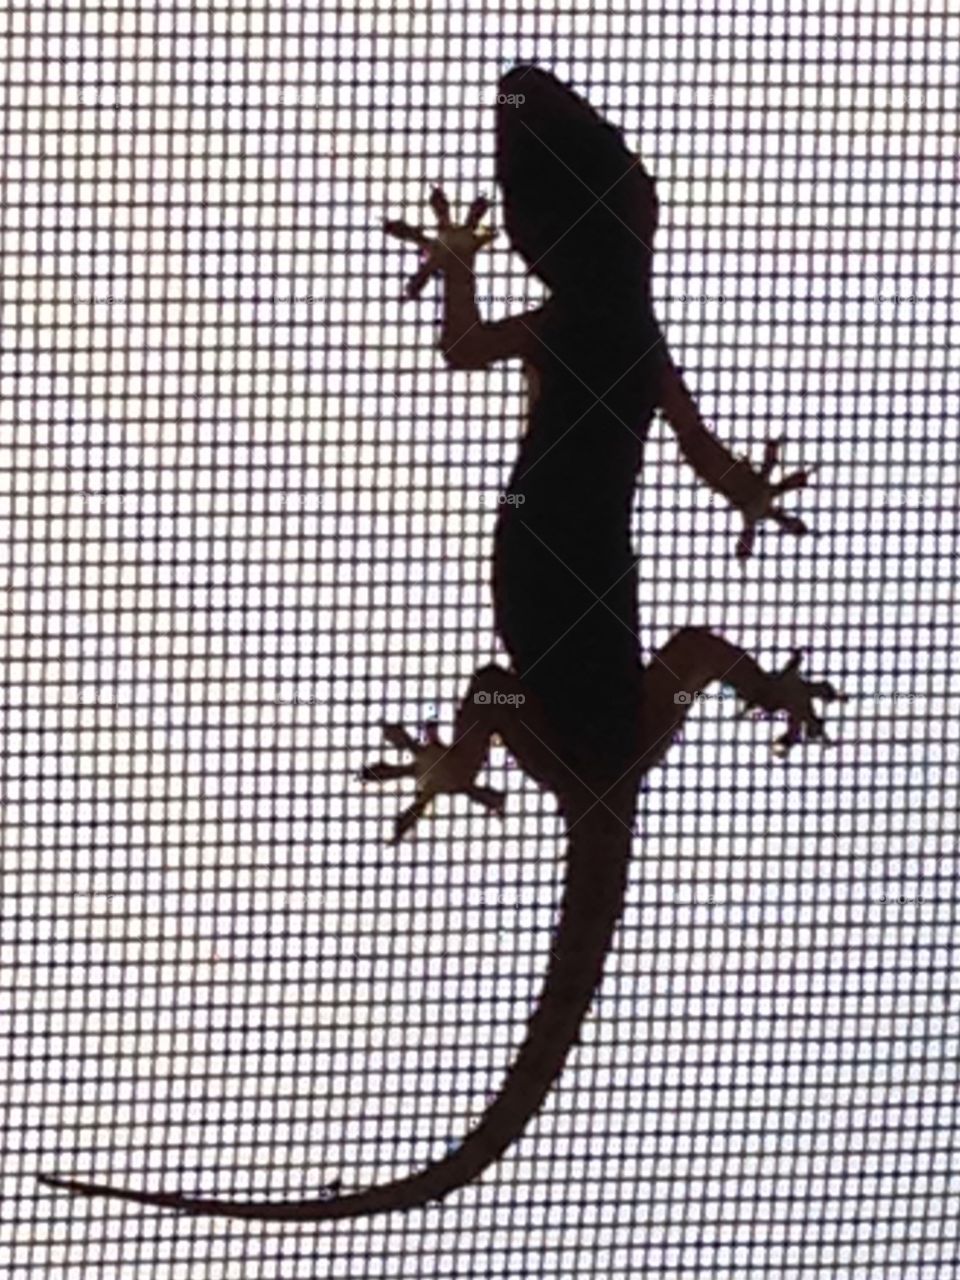 Lizard climbing on screen